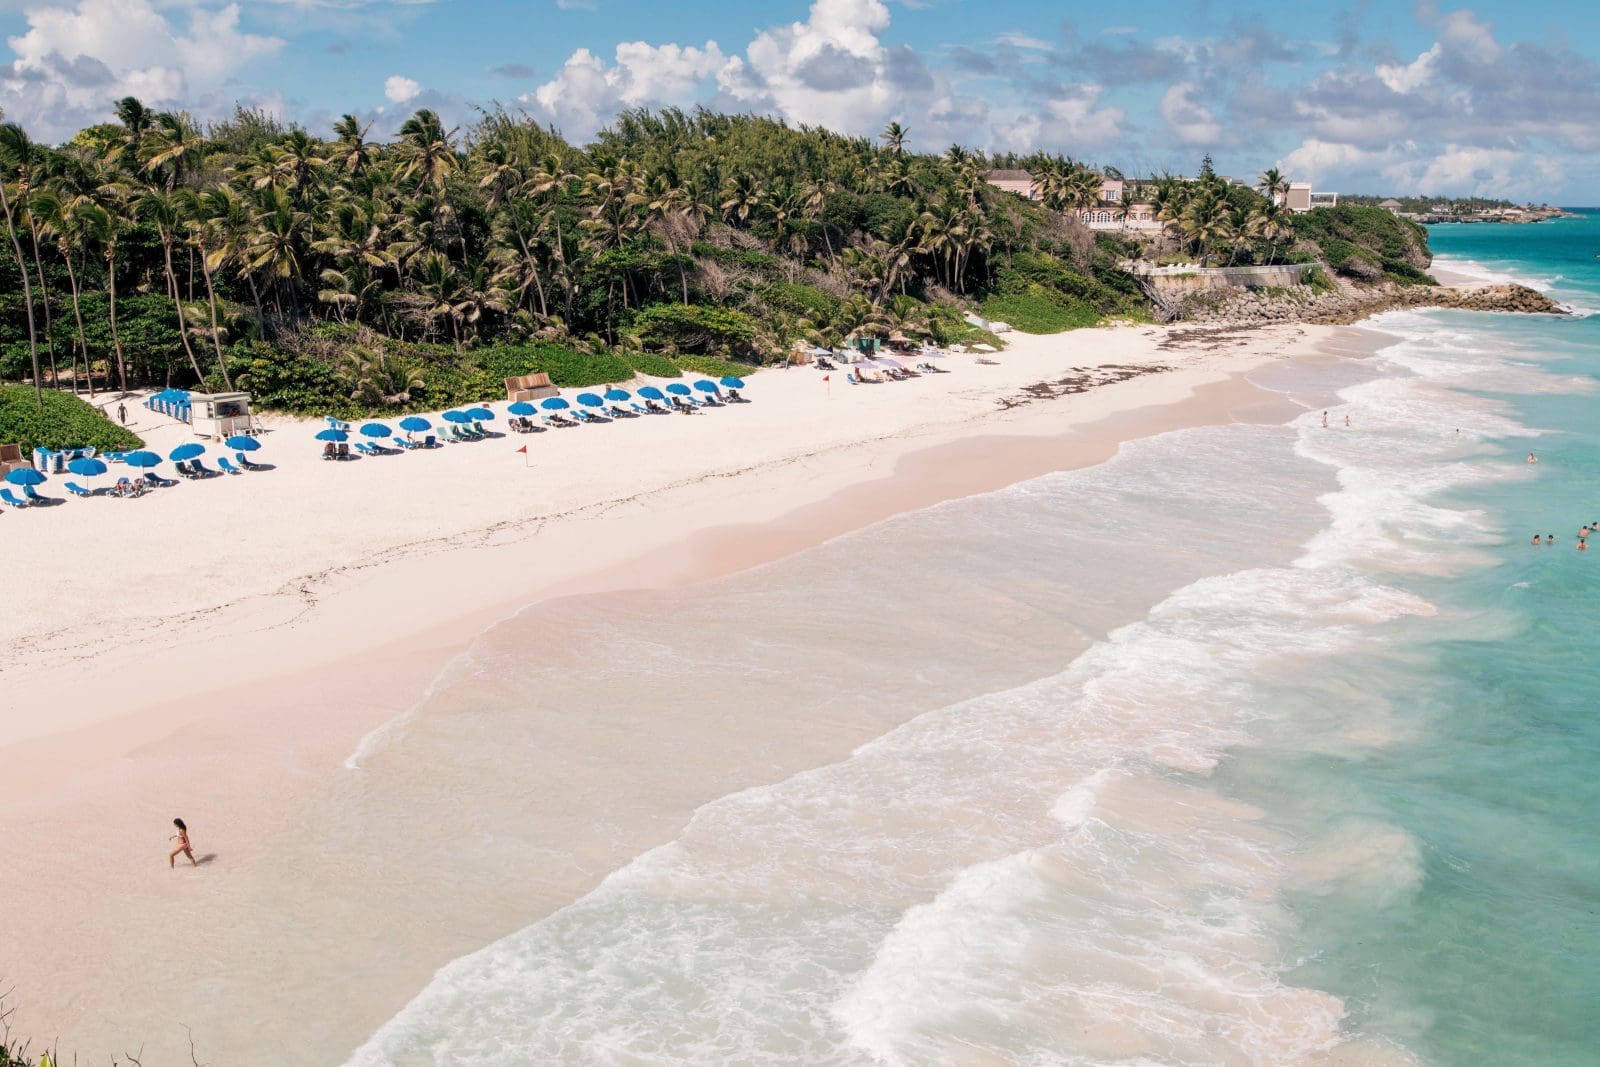 Help keep Barbados' beaches pristine